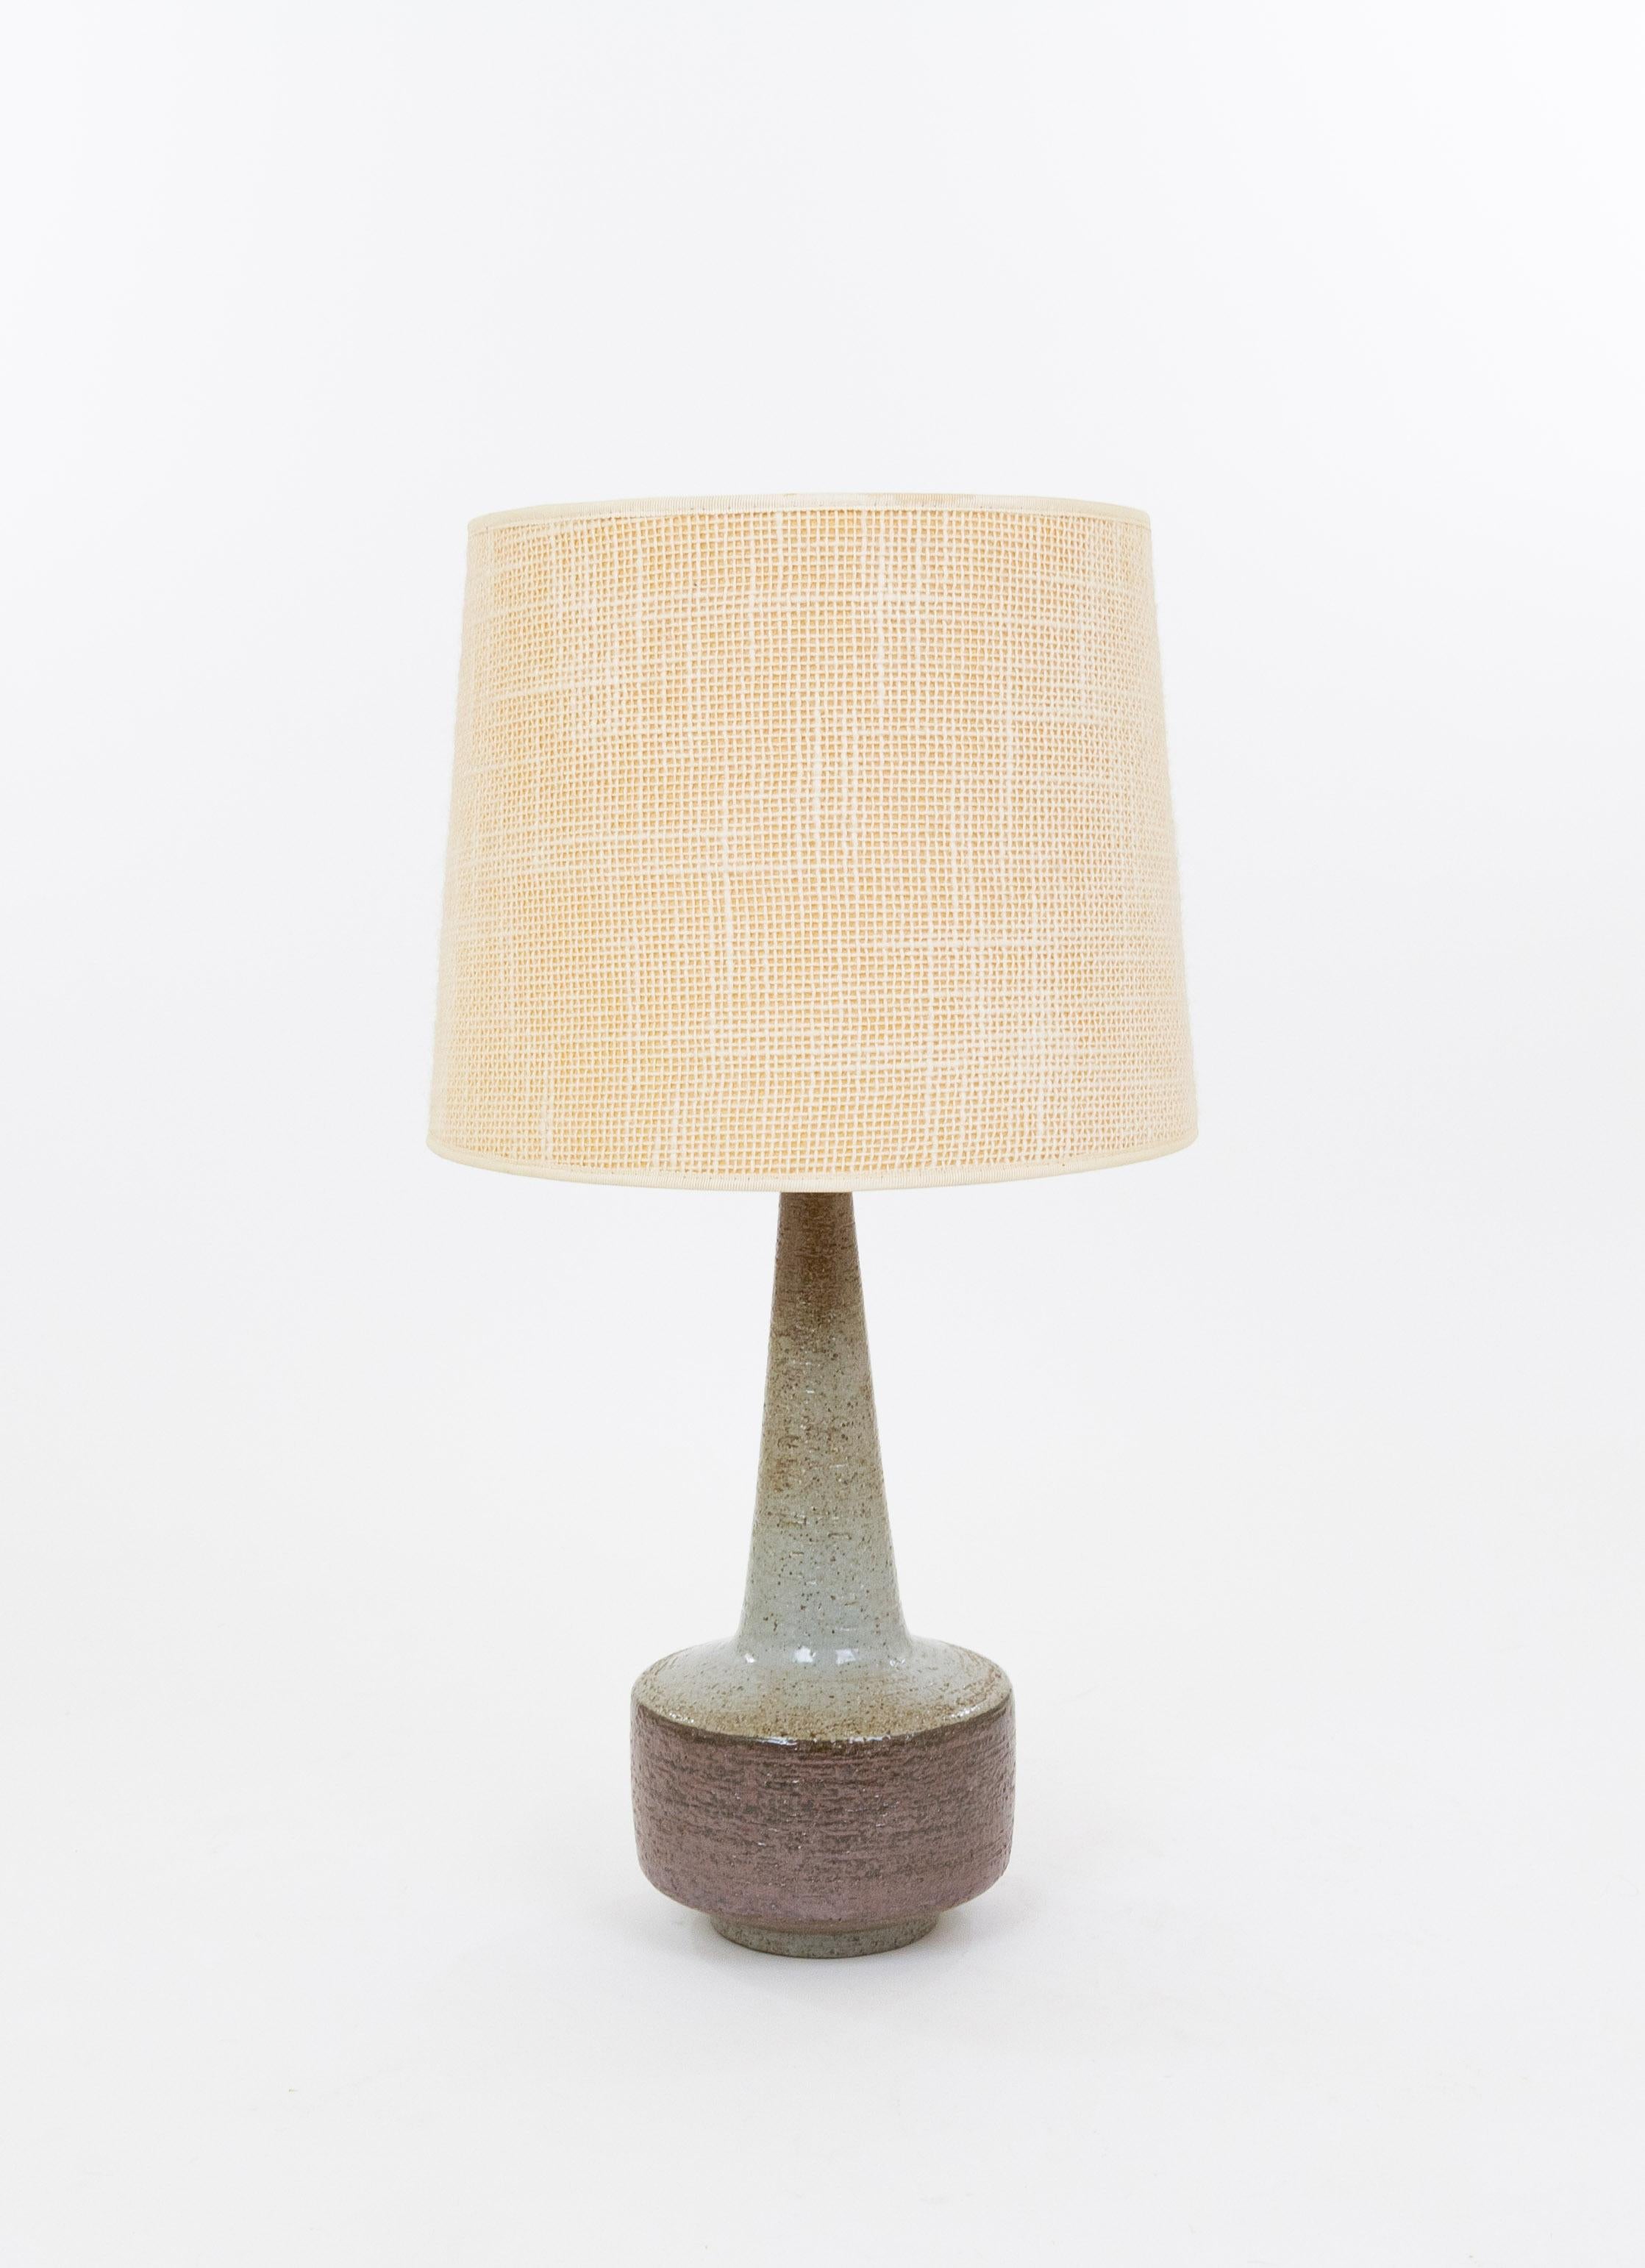 Scandinavian Modern Brown and Grey DL/46 table lamp by Linnemann-Schmidt for Palshus, 1960s For Sale